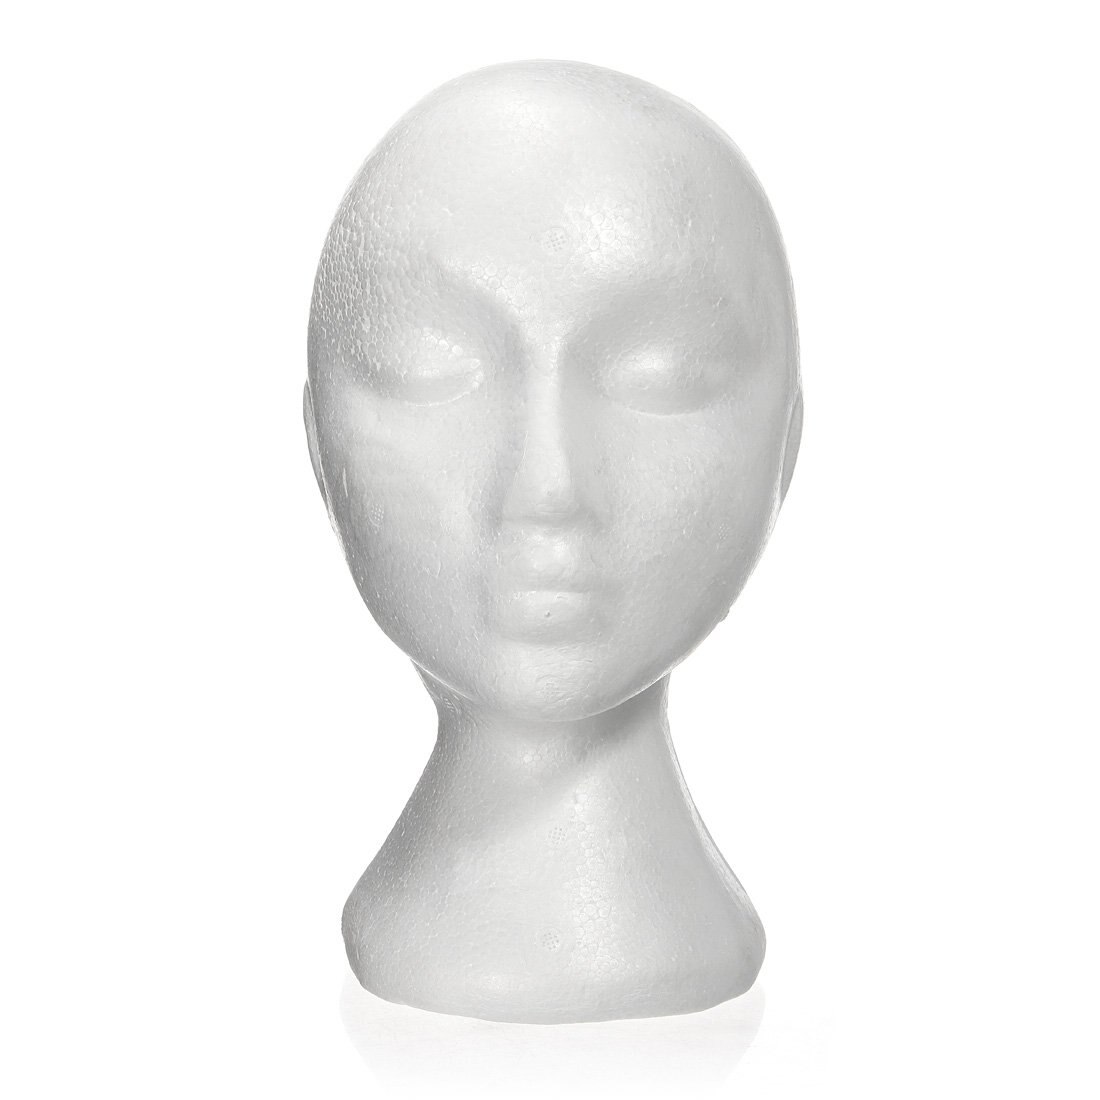 27.5x52 centimetri Manichino/mannequin Femminile testa di Schiuma (Polistirolo) Espositore per cap, cuffie, accessori per capelli e parrucche Donna Ma